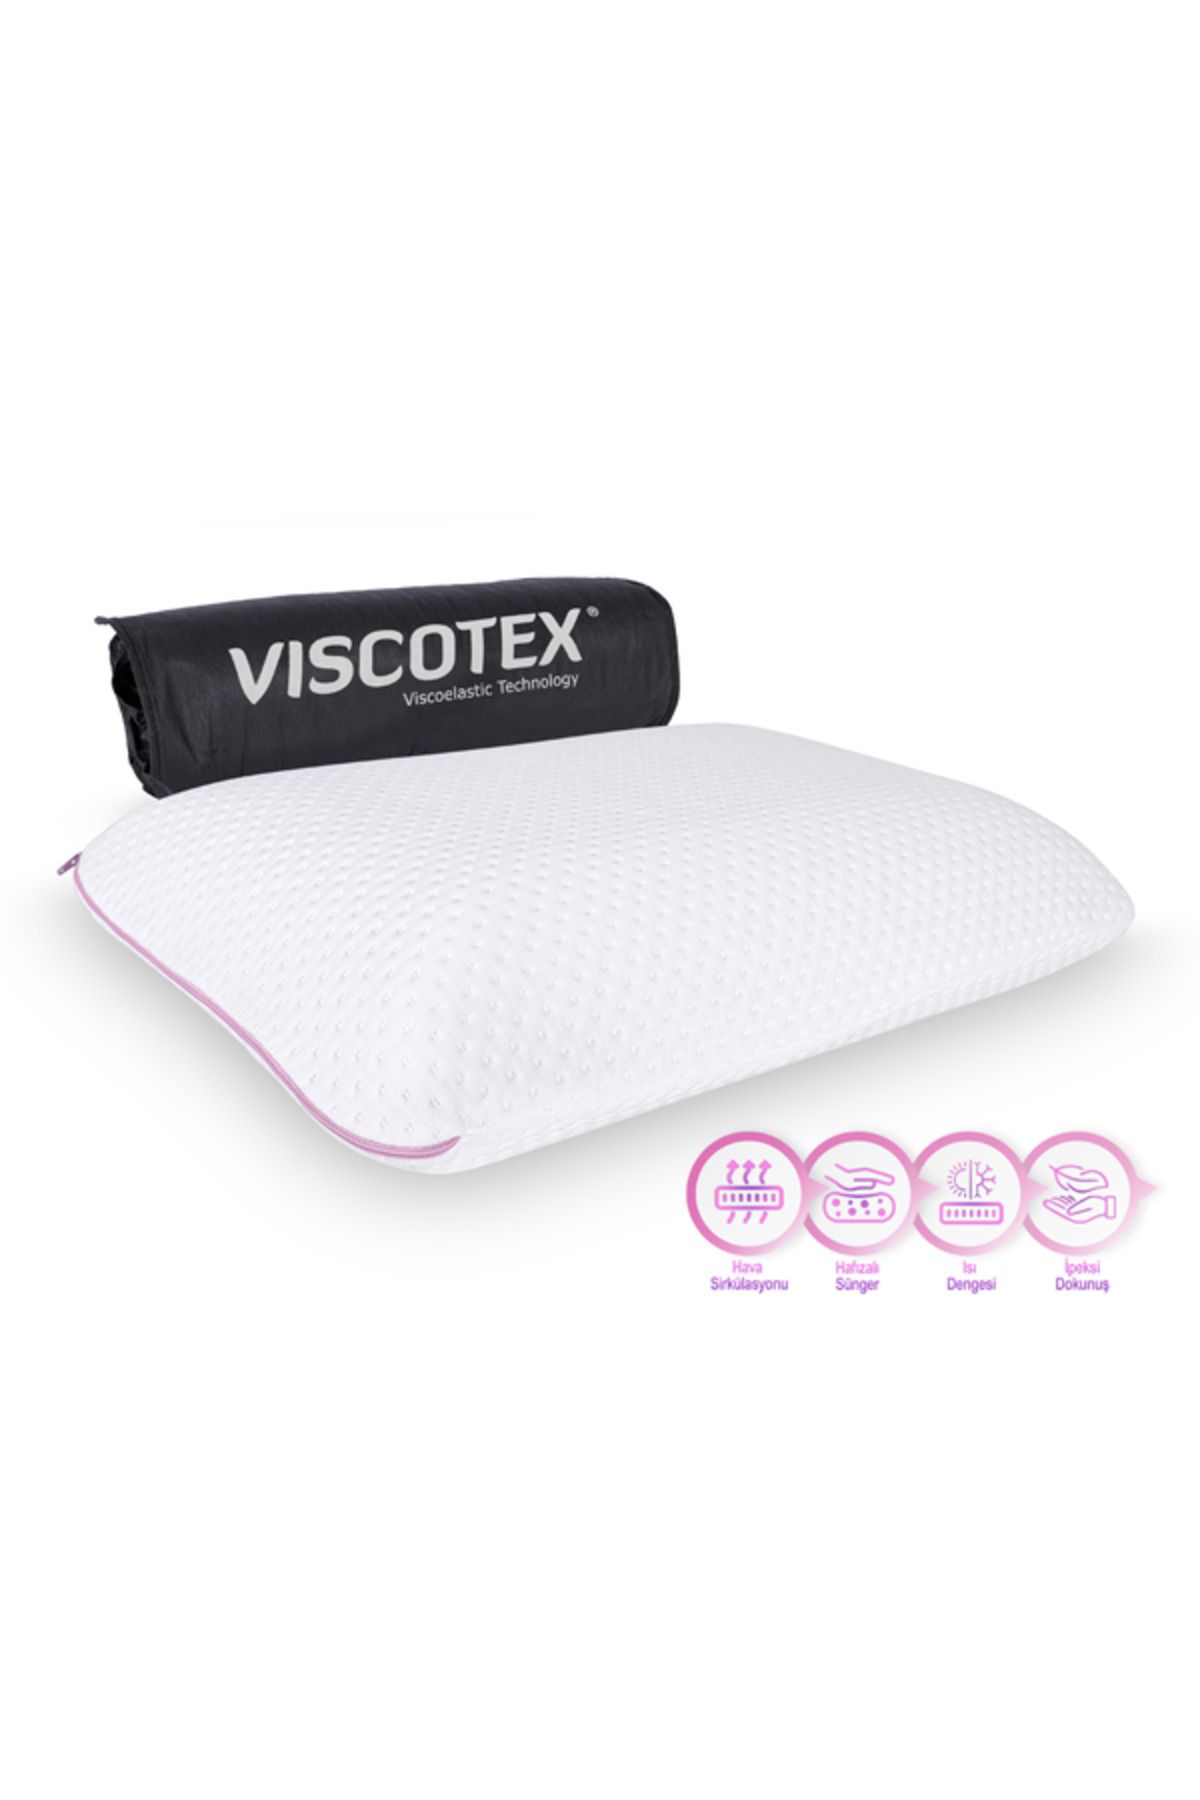 VİSCOTEX Visco Hava Kanallı Klasik Yastık, Medium, 60x40x14cm, Beyaz-Pembe